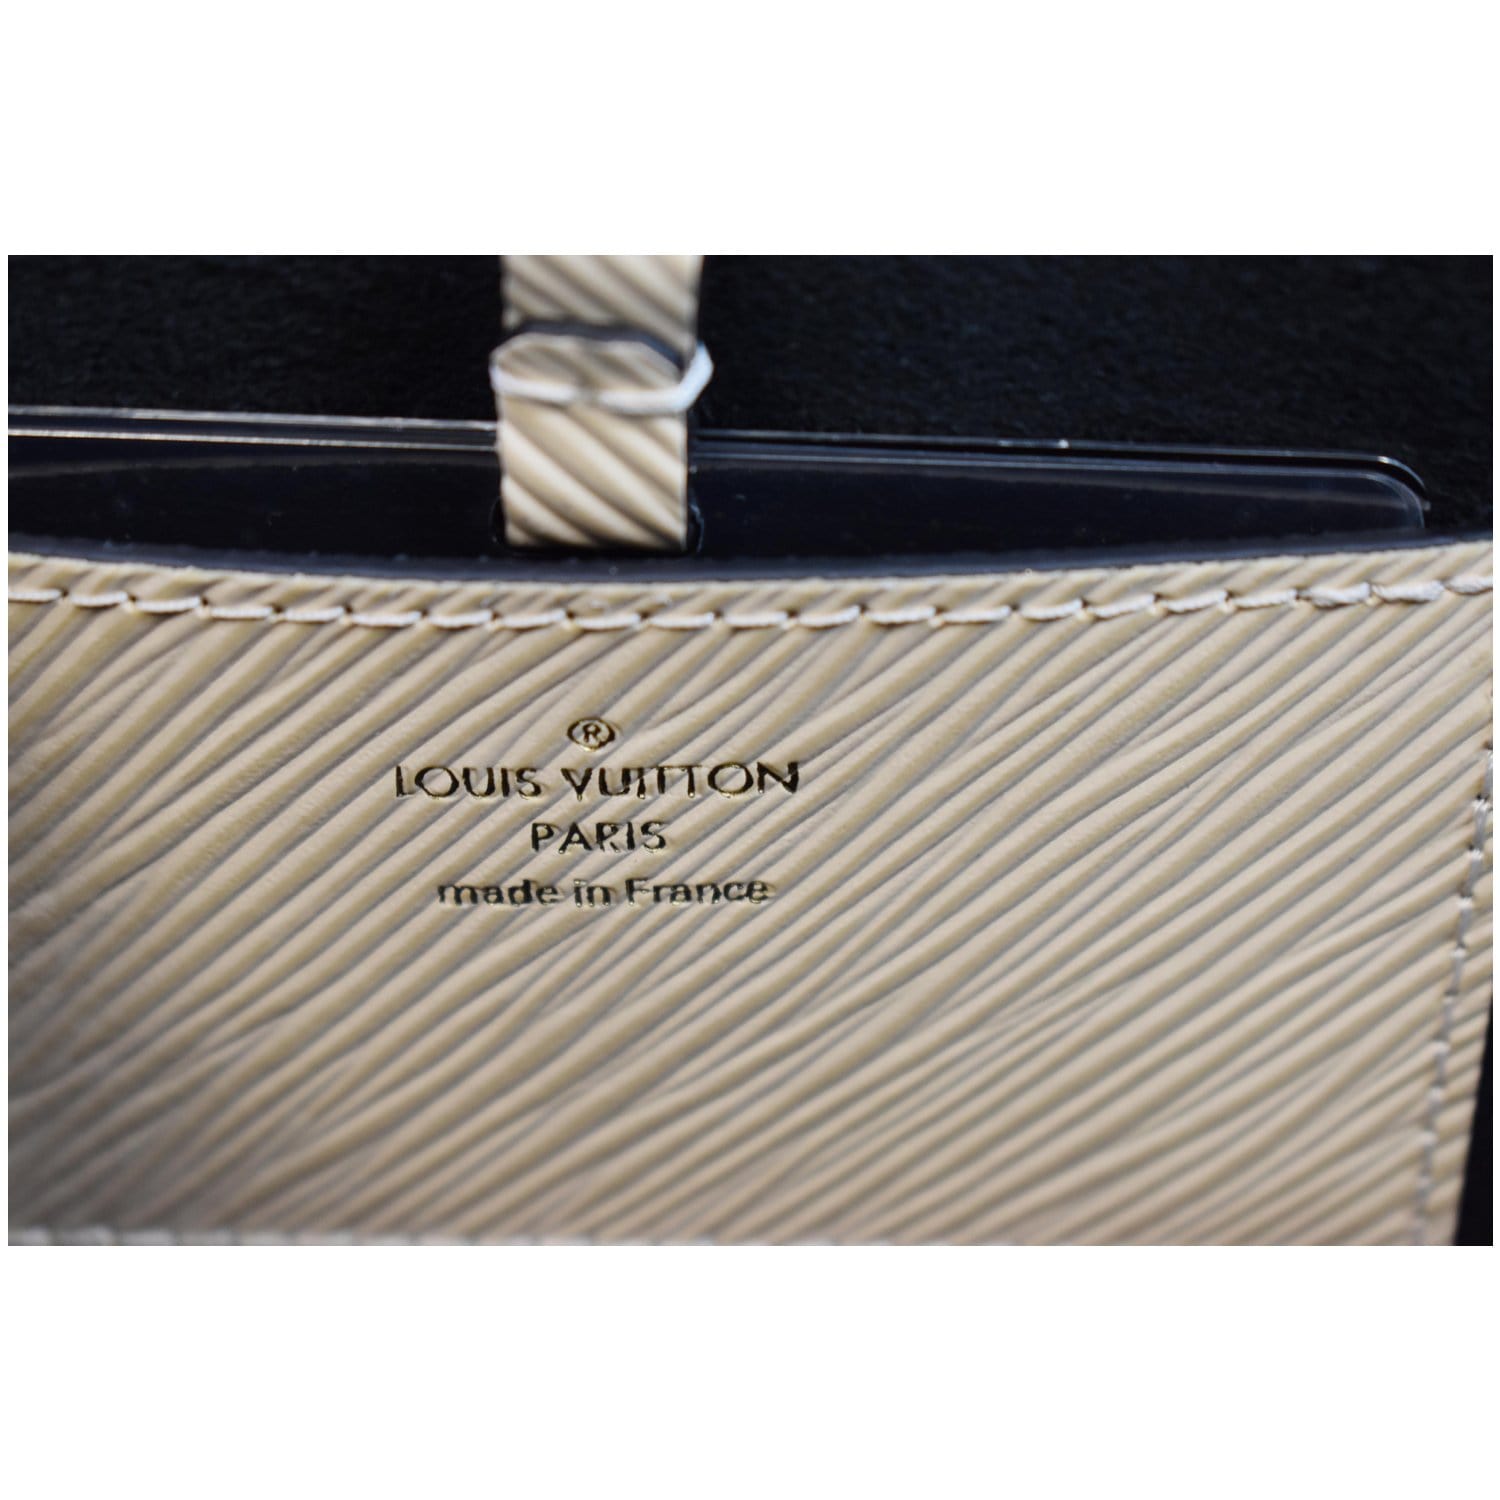 Tênis Louis Vuitton Knit Fabric Archlight Preto Original - PIZ303